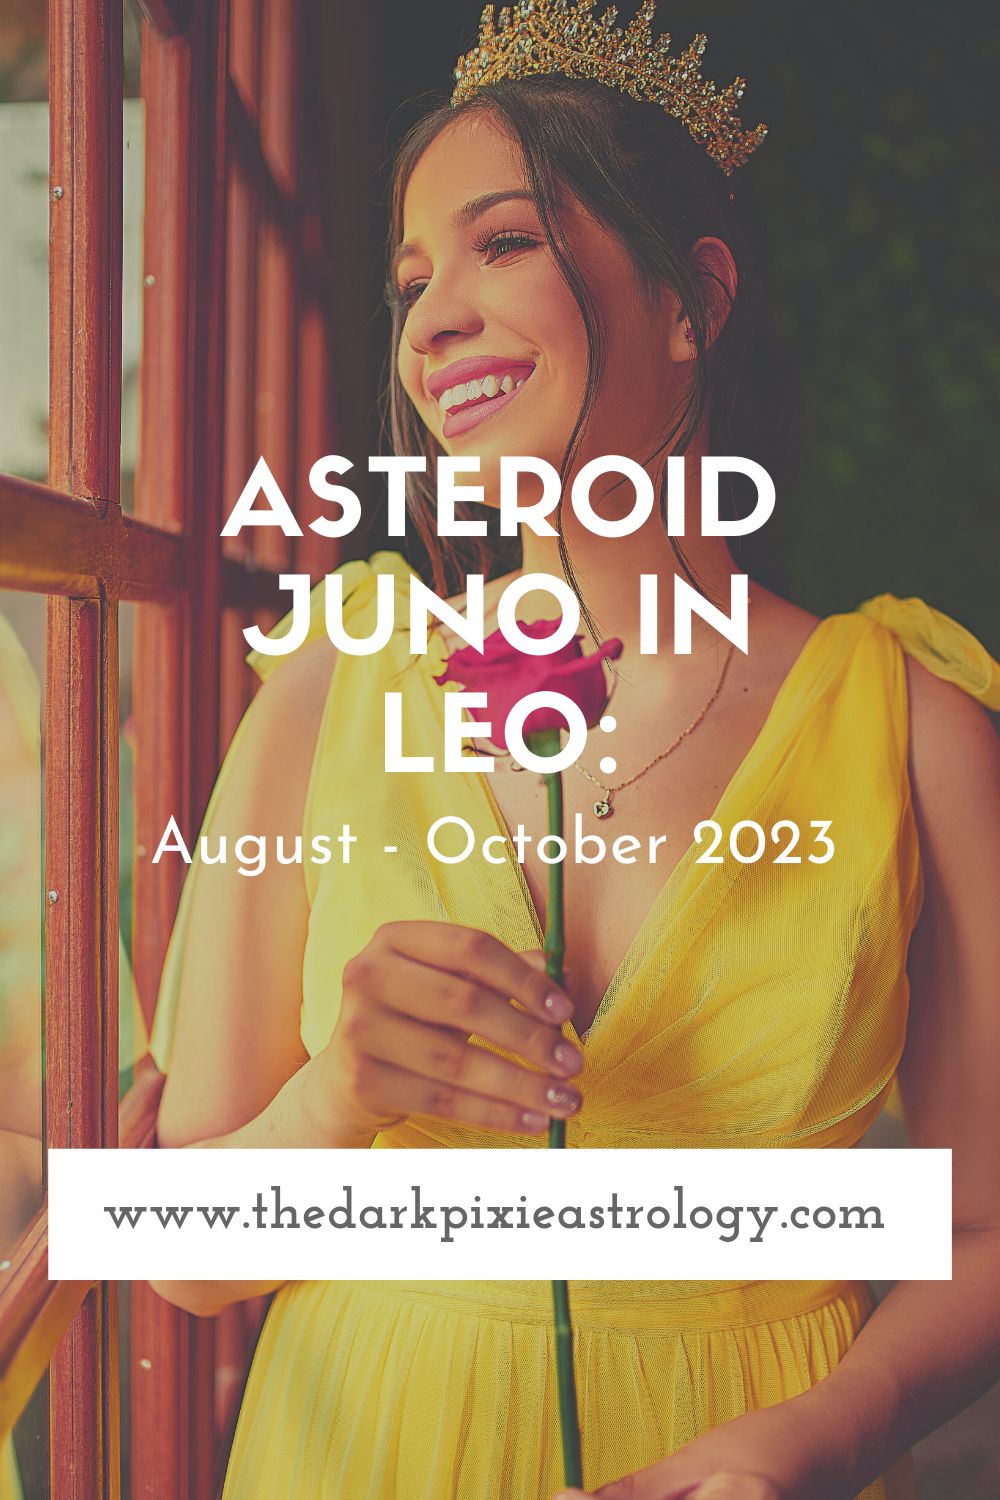 Transit Asteroid Juno in Leo: August - October 2023 - The Dark Pixie Astrology